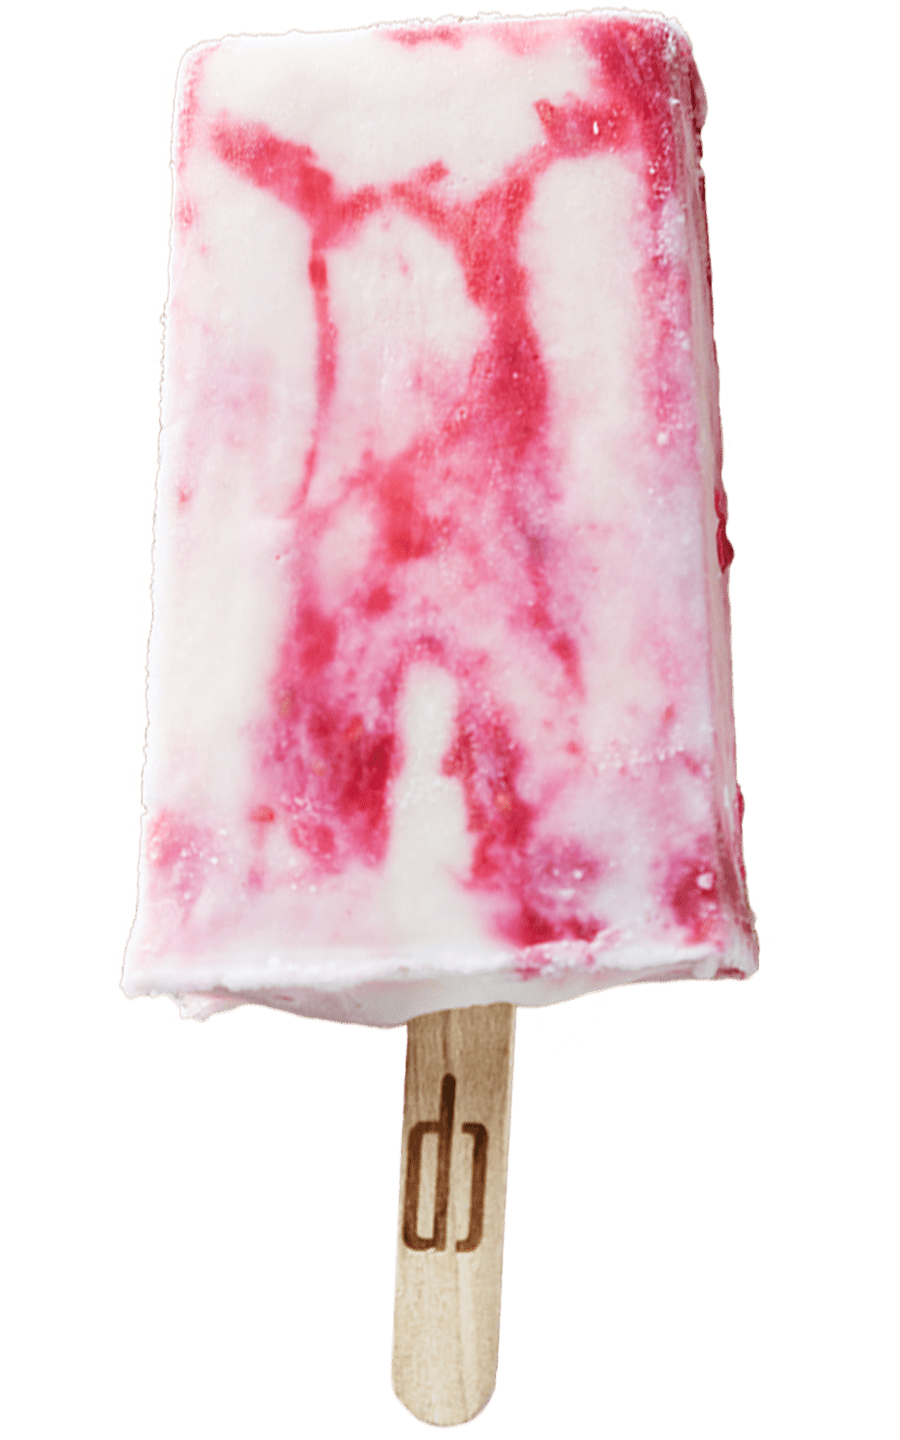 California Pops Eis am Stil Himbeere Joghurt